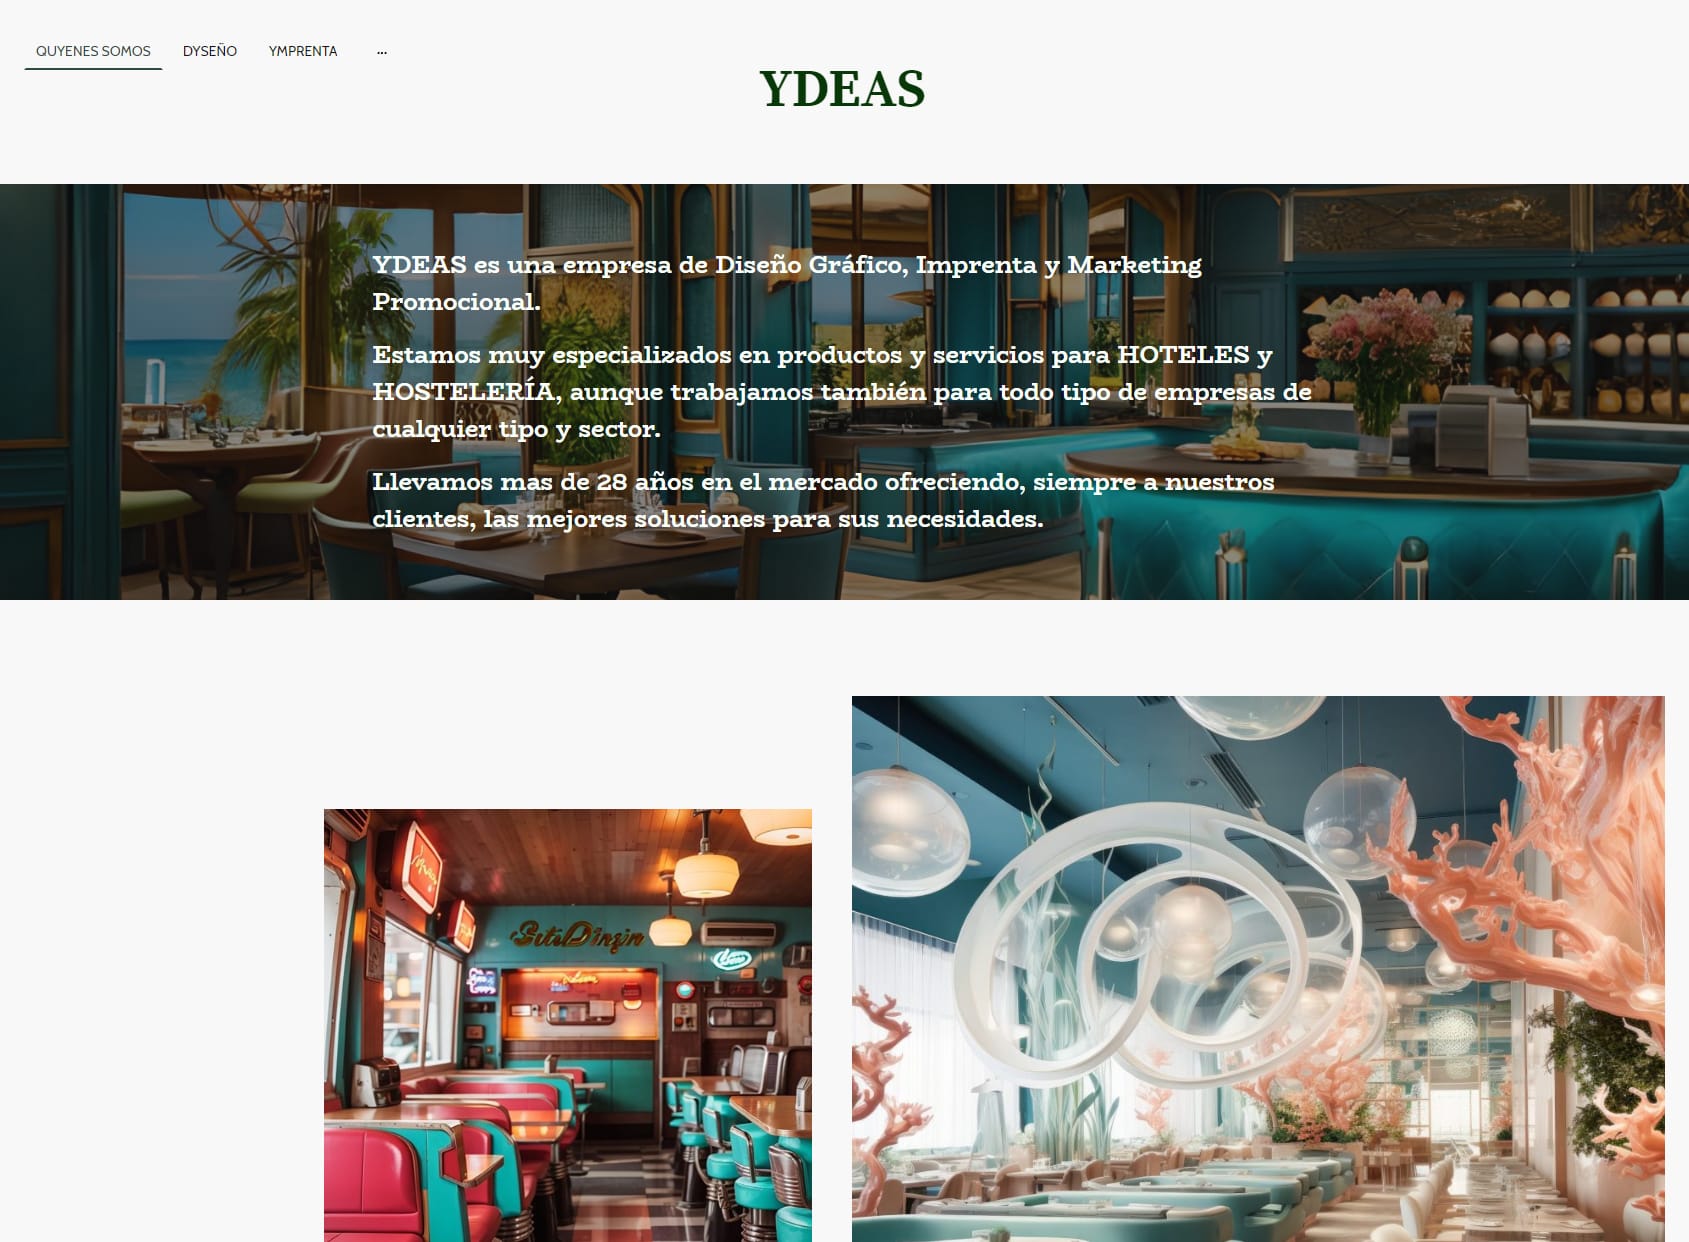 YDEAS design, print & marketing